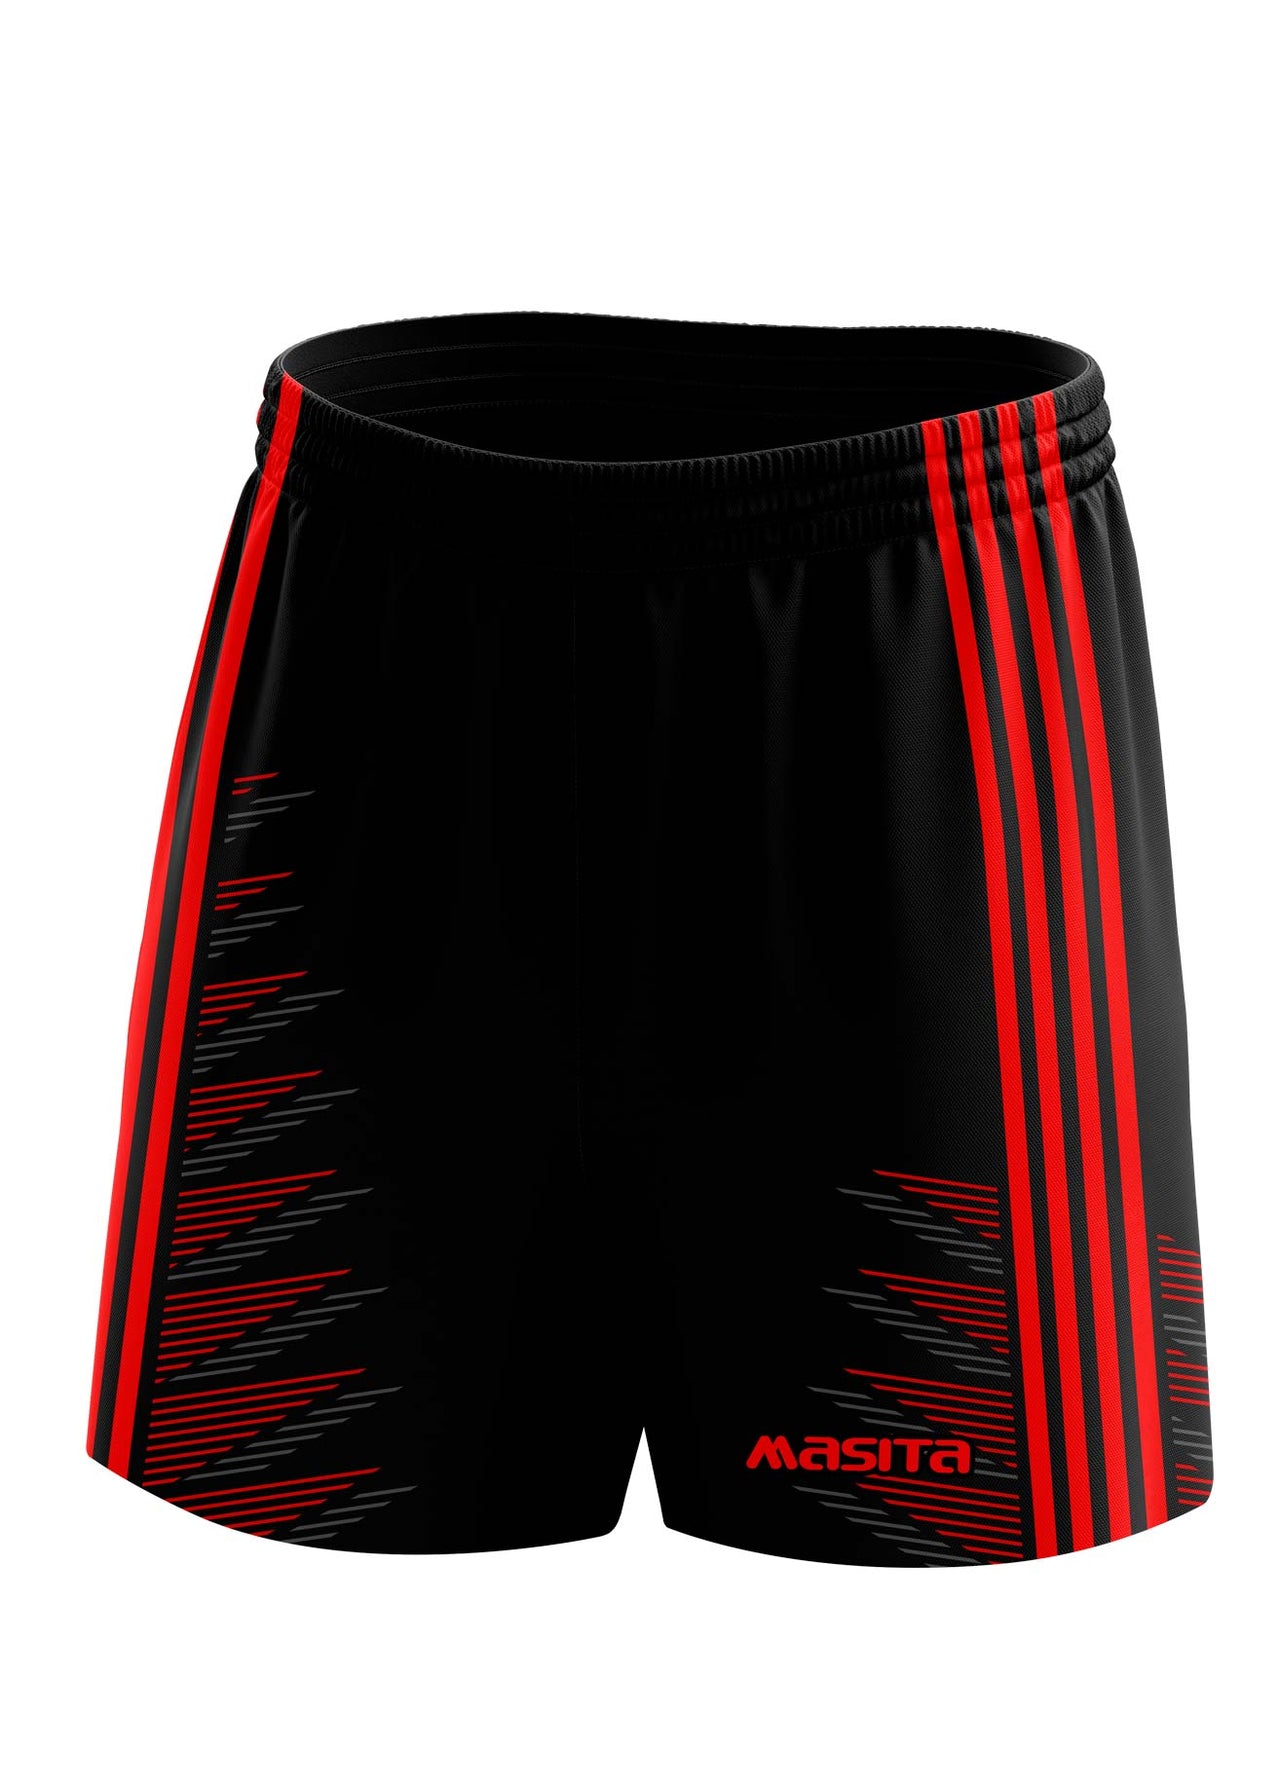 Hydro Gaelic Shorts Black/Red Adult